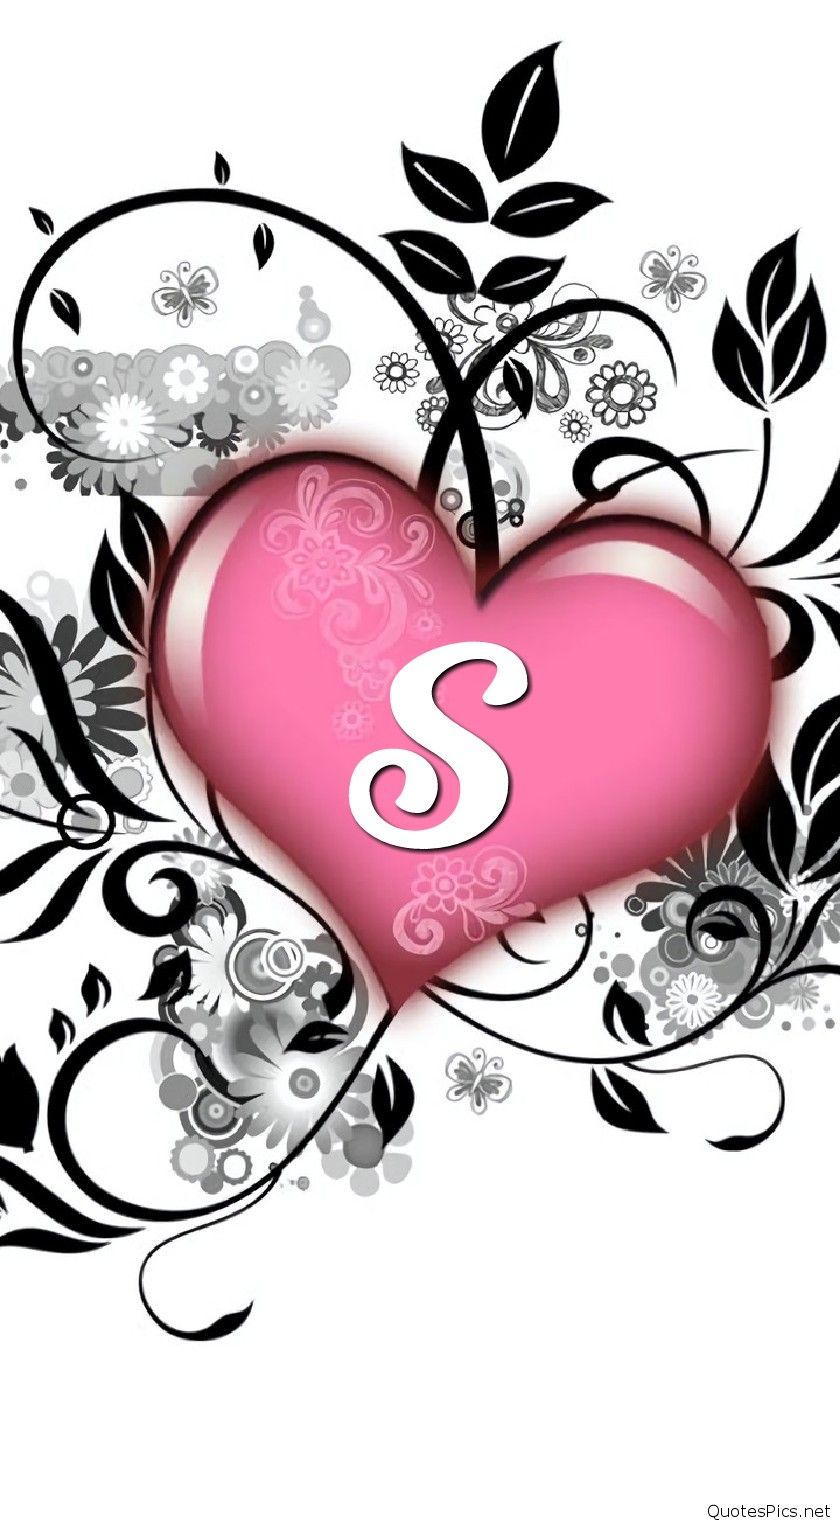 S Letter Wallpaper For Facebook Image 2 S In Love Wallpaper & Background Download